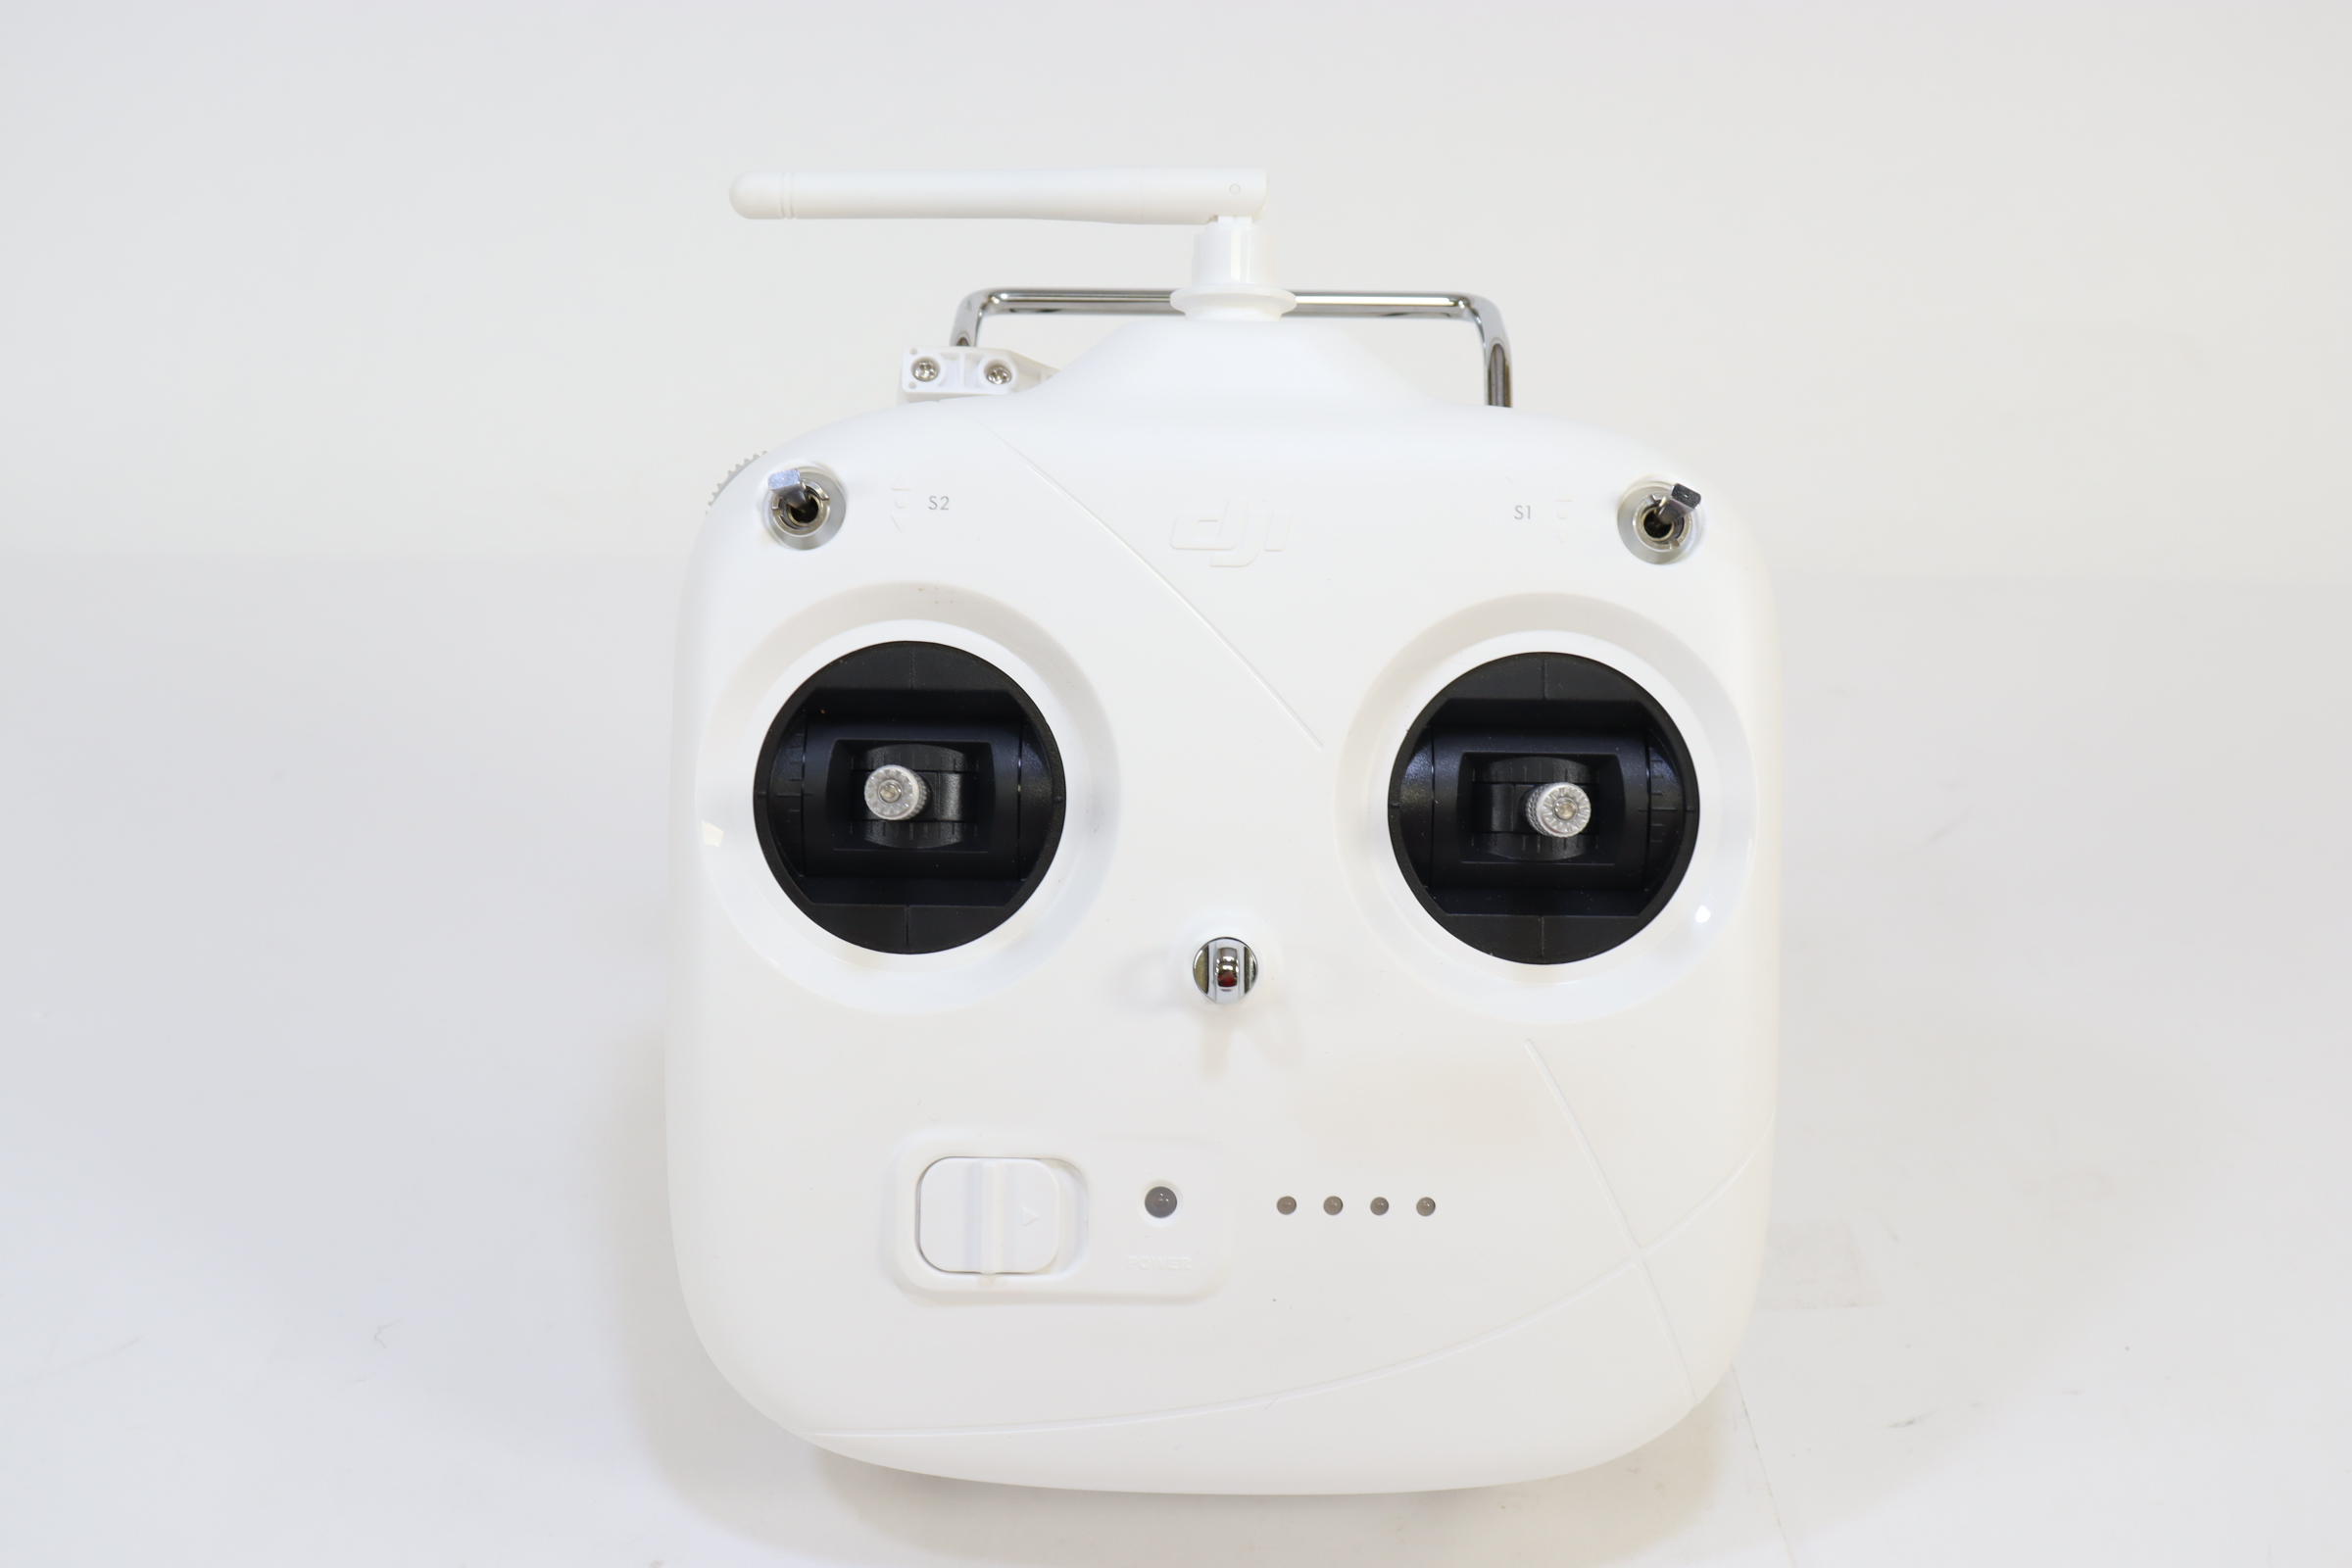  DJI Phantom 3 Standard Quadcopter Drone with 2.7K HD Video  Camera : Toys & Games